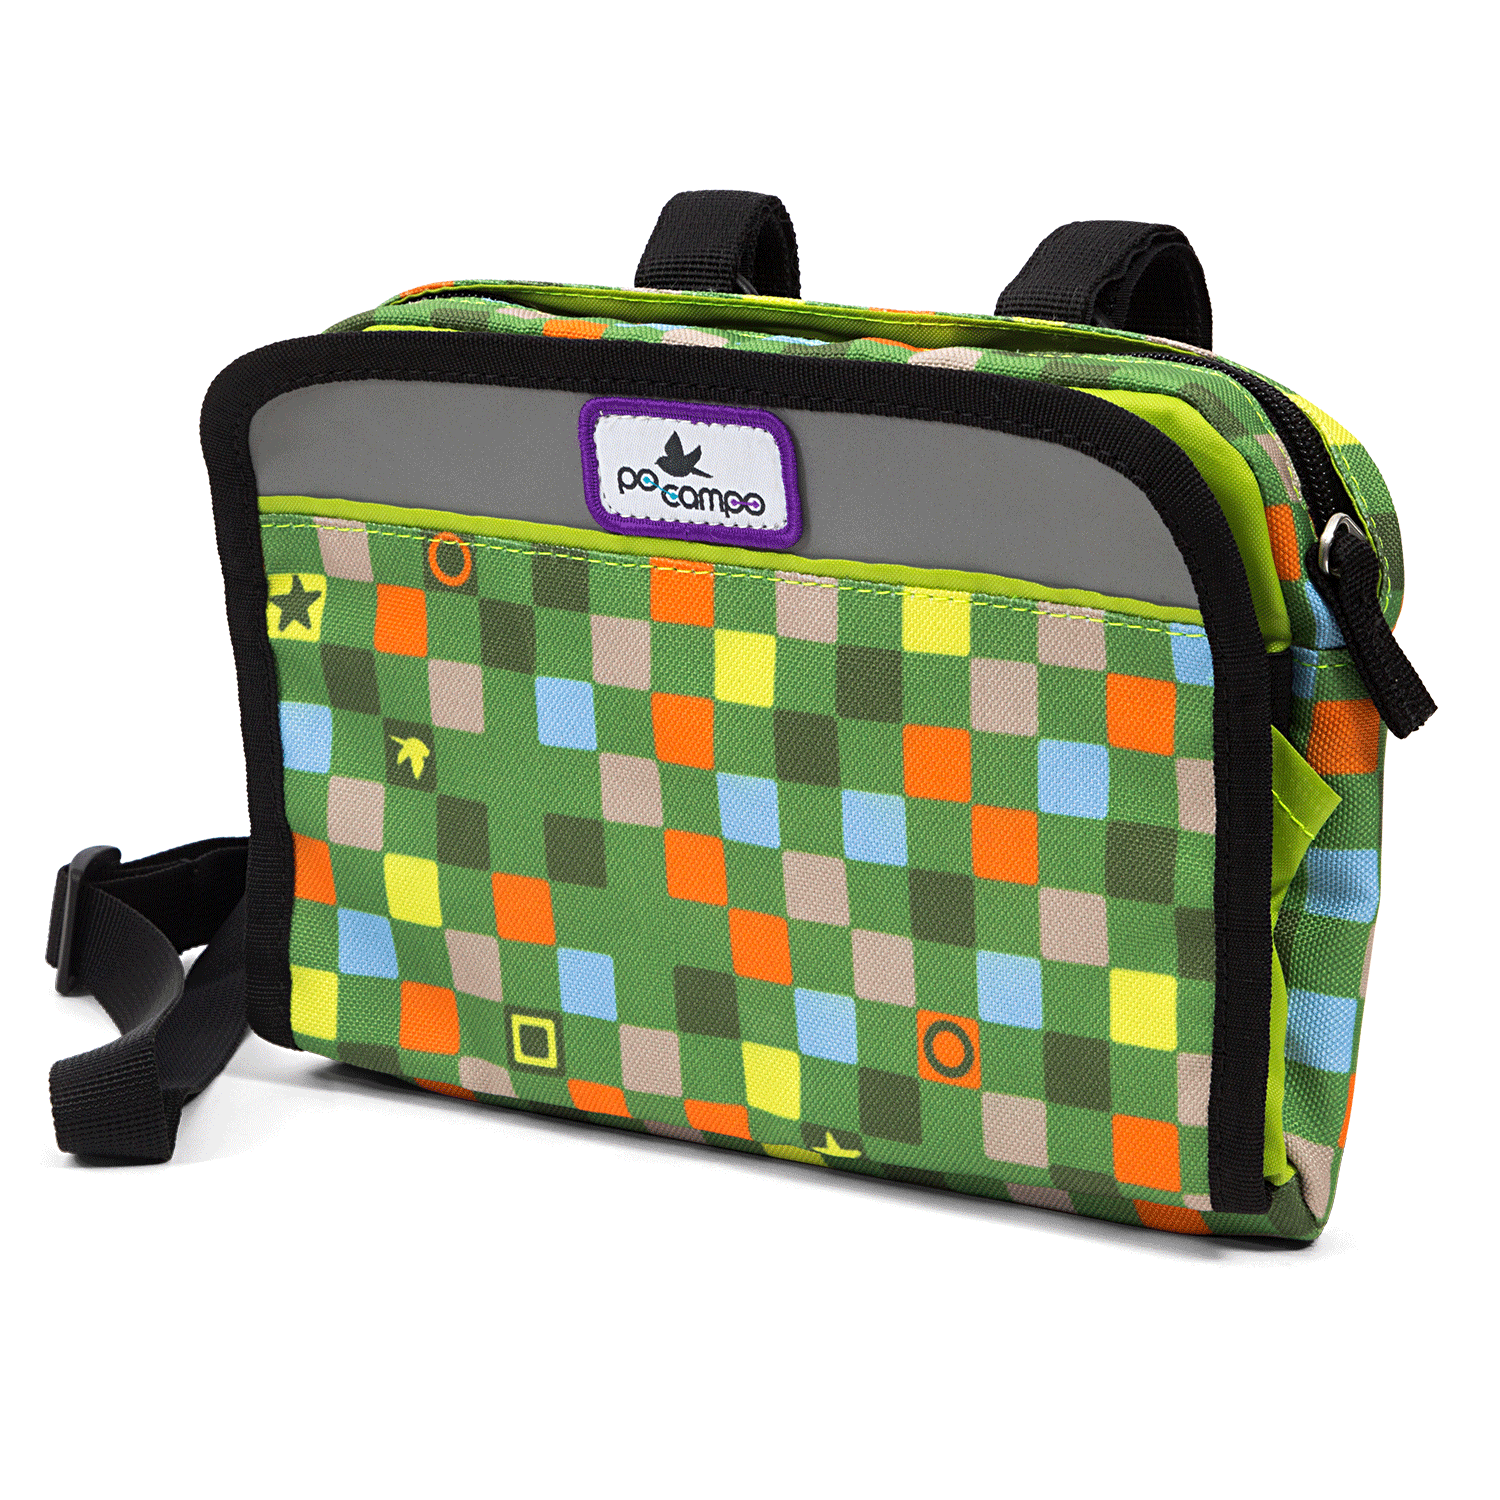 Po Campo Speedy Handlebar Bag in Checker | color:checker;